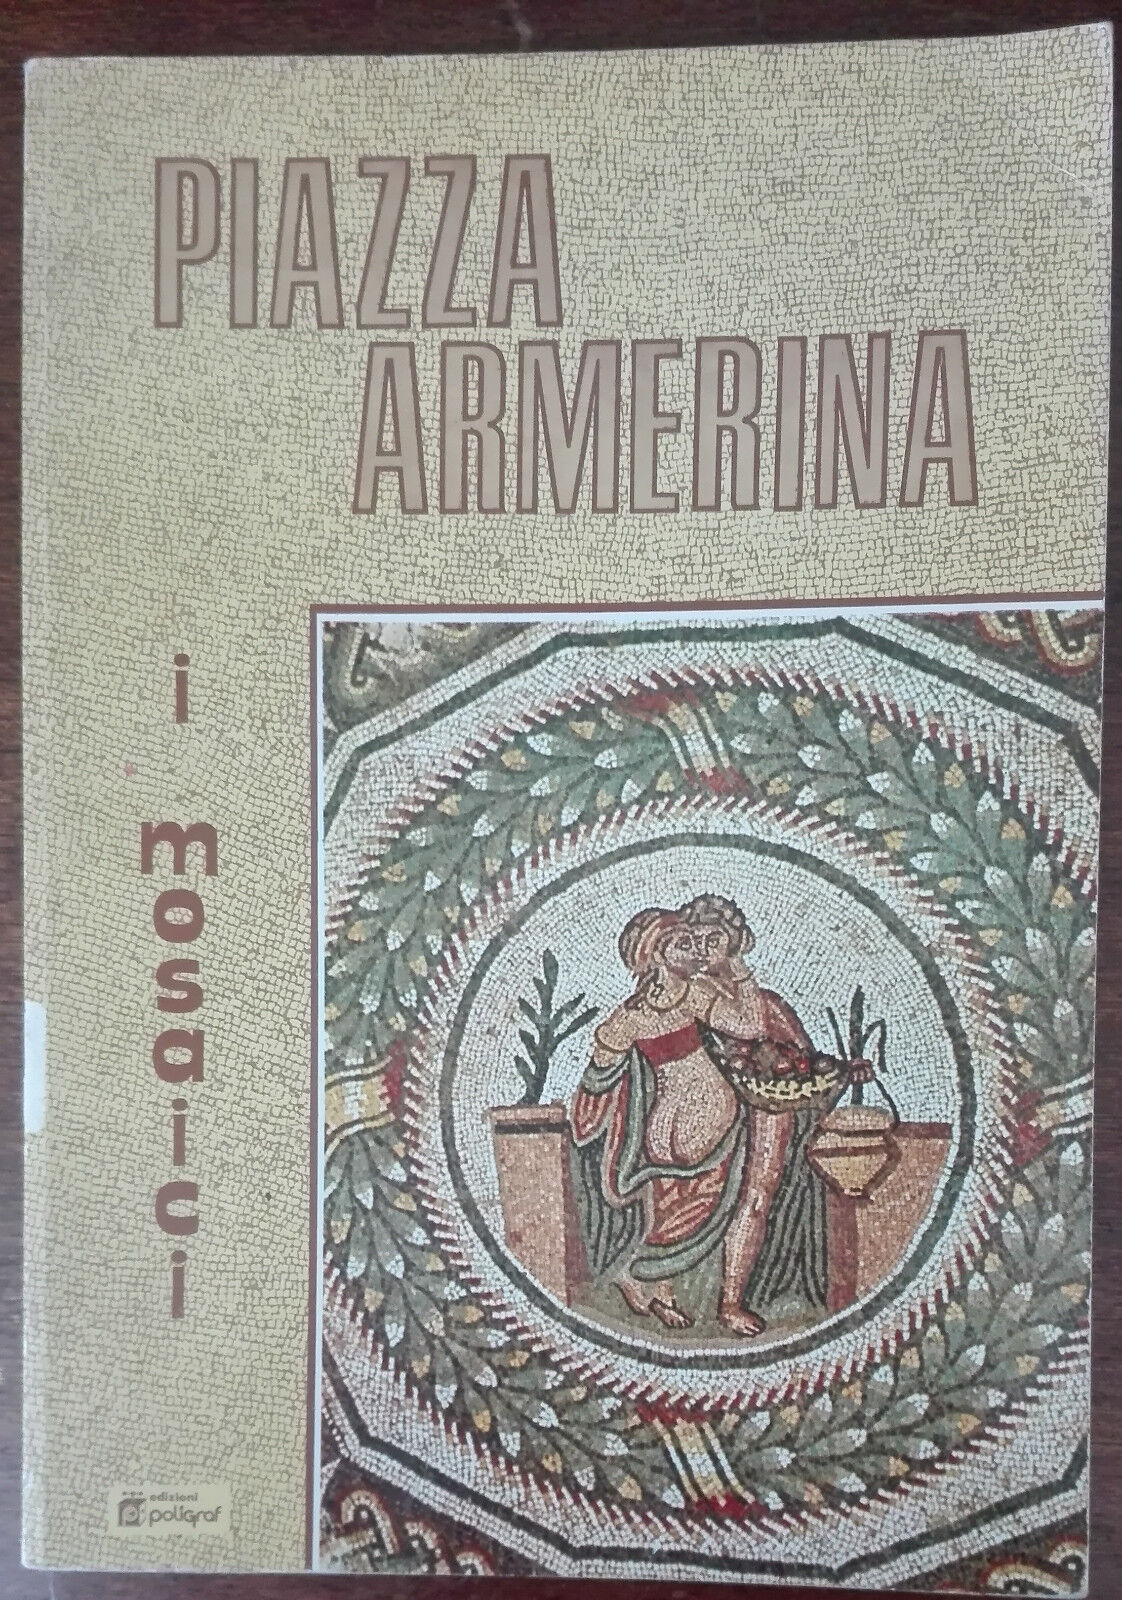 Piazza Armerina - AA.VV. - Poligraf, 1977 - A